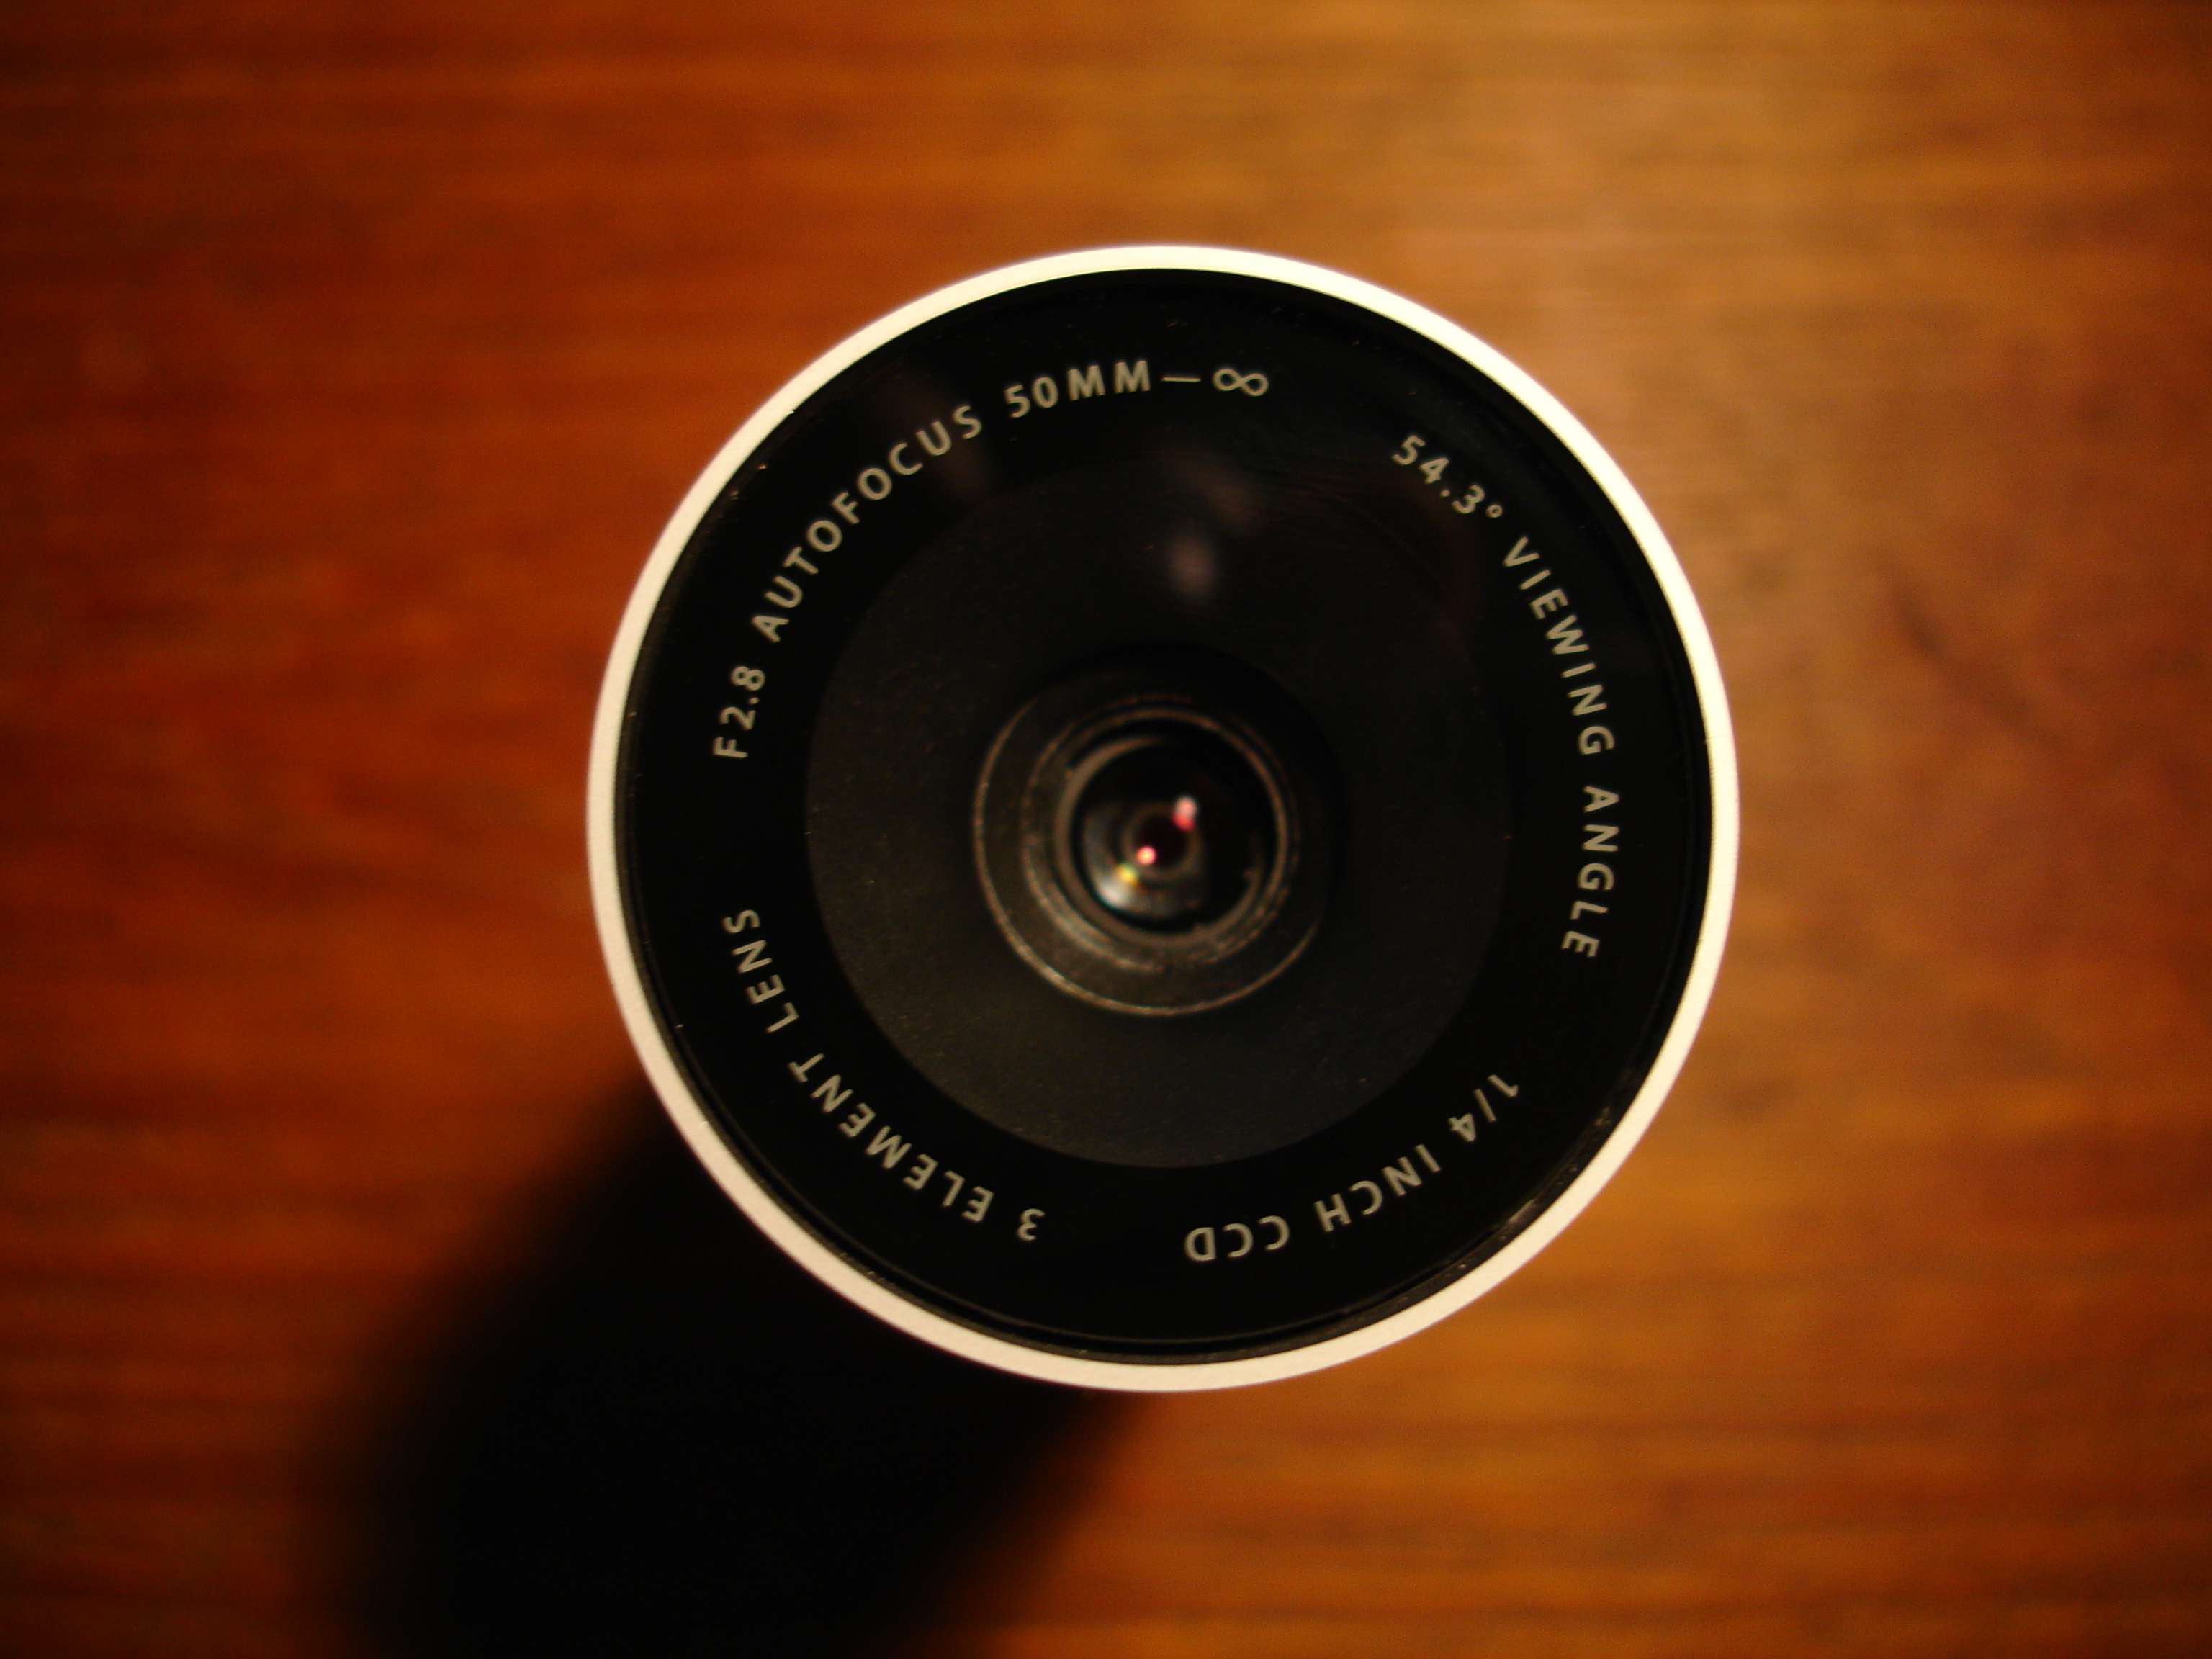 File:Apple iSight webcam.JPG - Wikimedia Commons